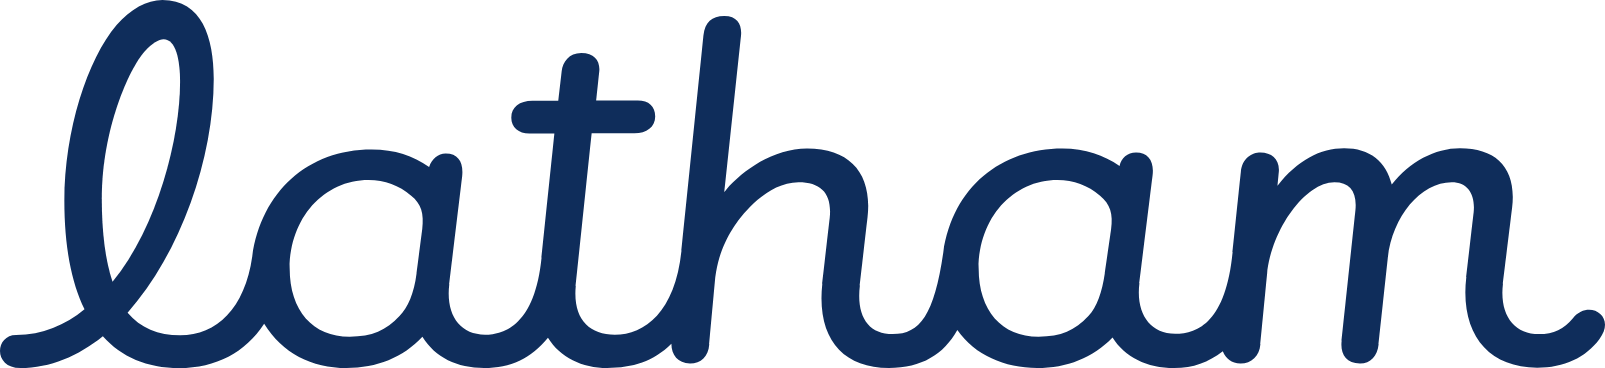 Latham Group logo large (transparent PNG)